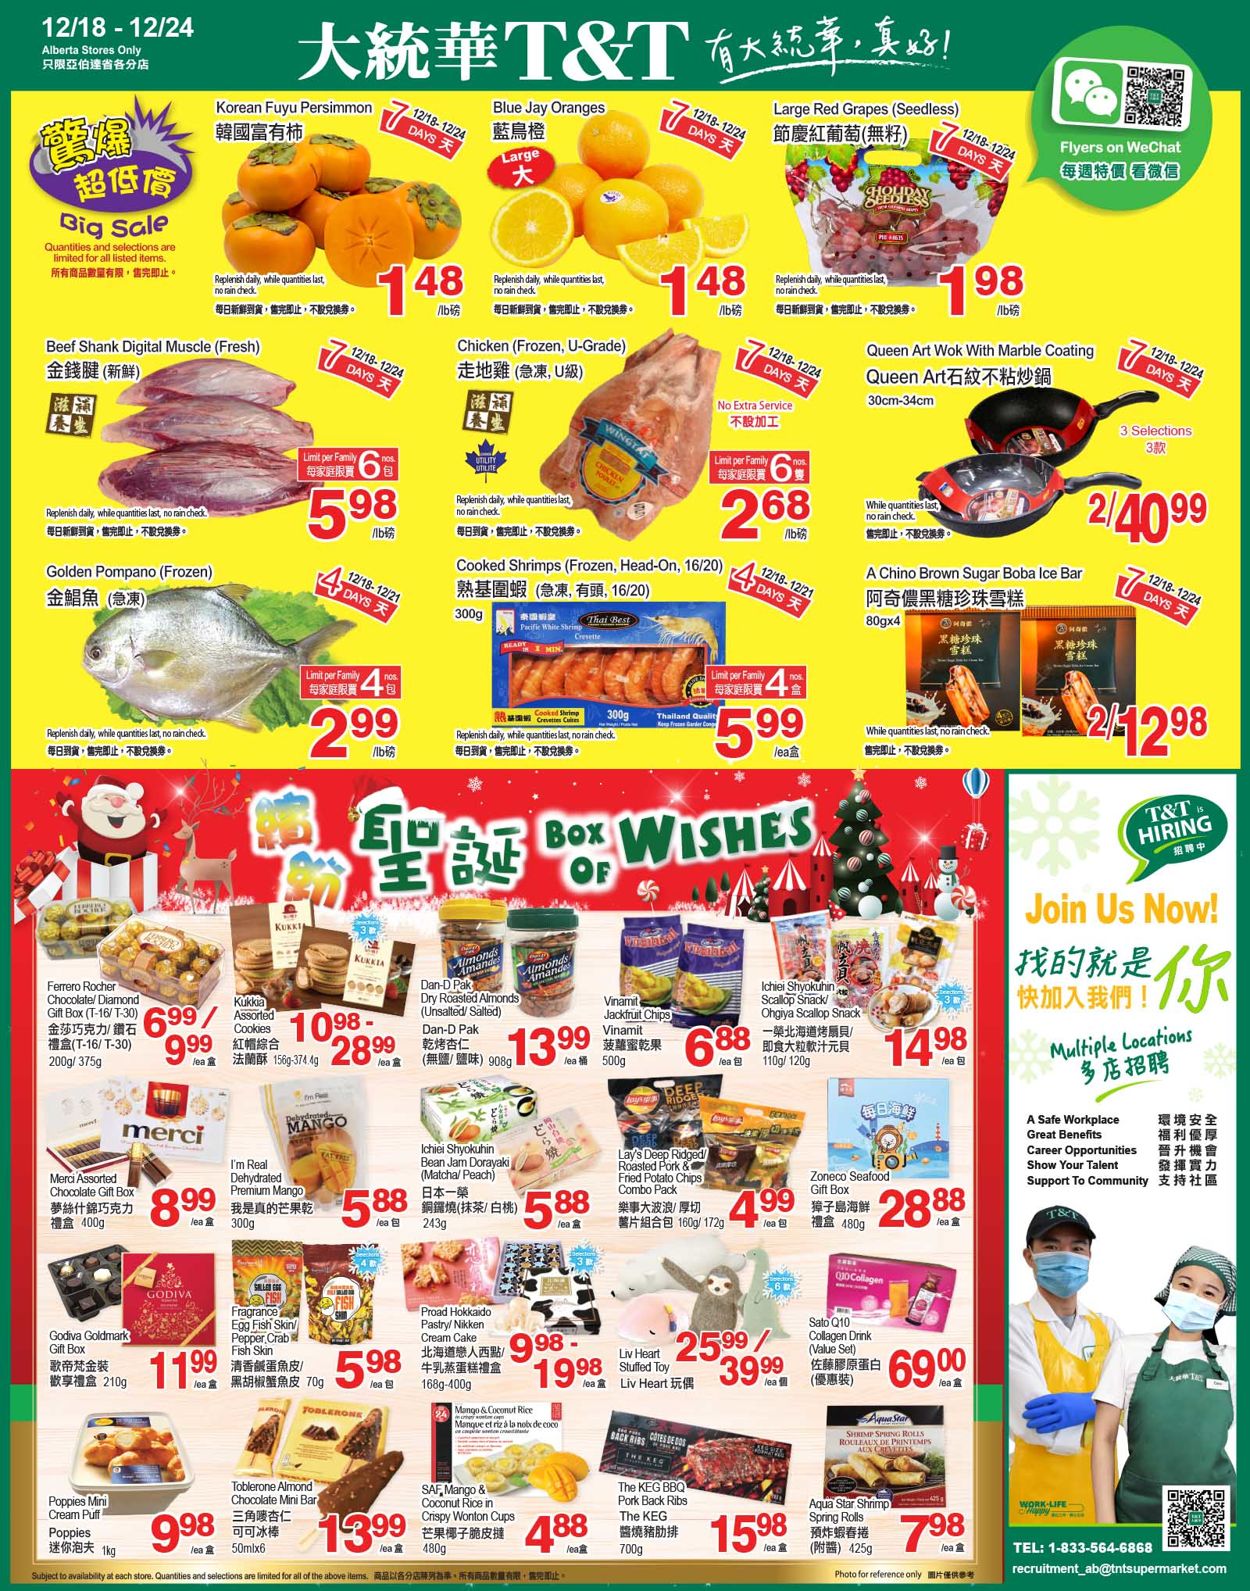 T&T Supermarket Christmas 2020 - Alberta Flyer - 12/18-12/24/2020